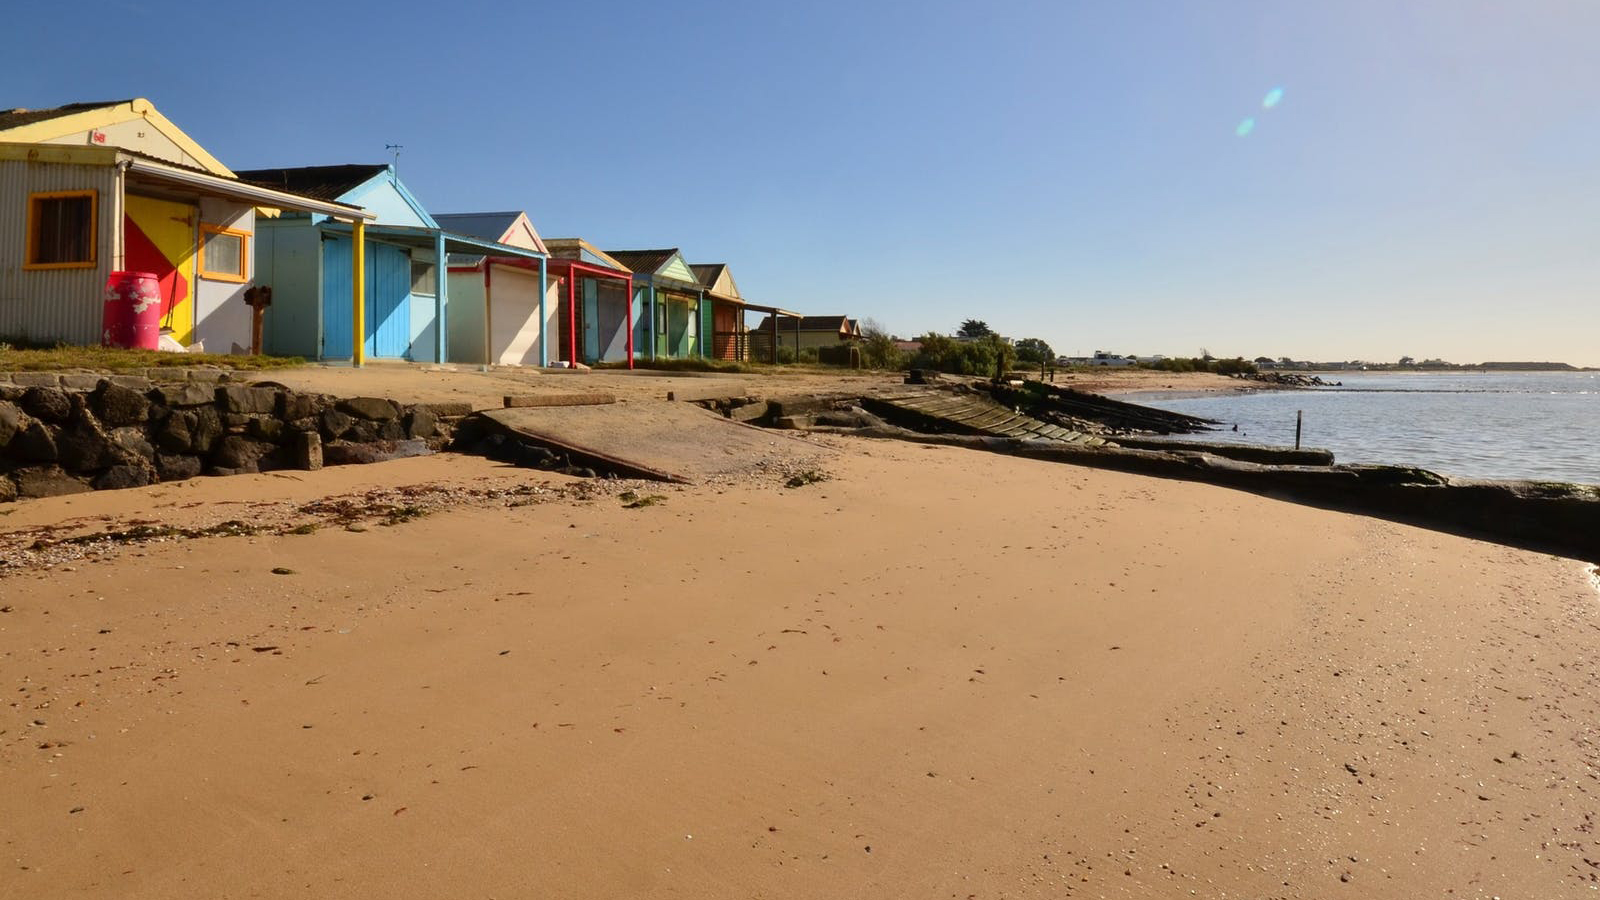 Campbell Cove beach houses, Werribee, Melbourne, Victoria, Australia